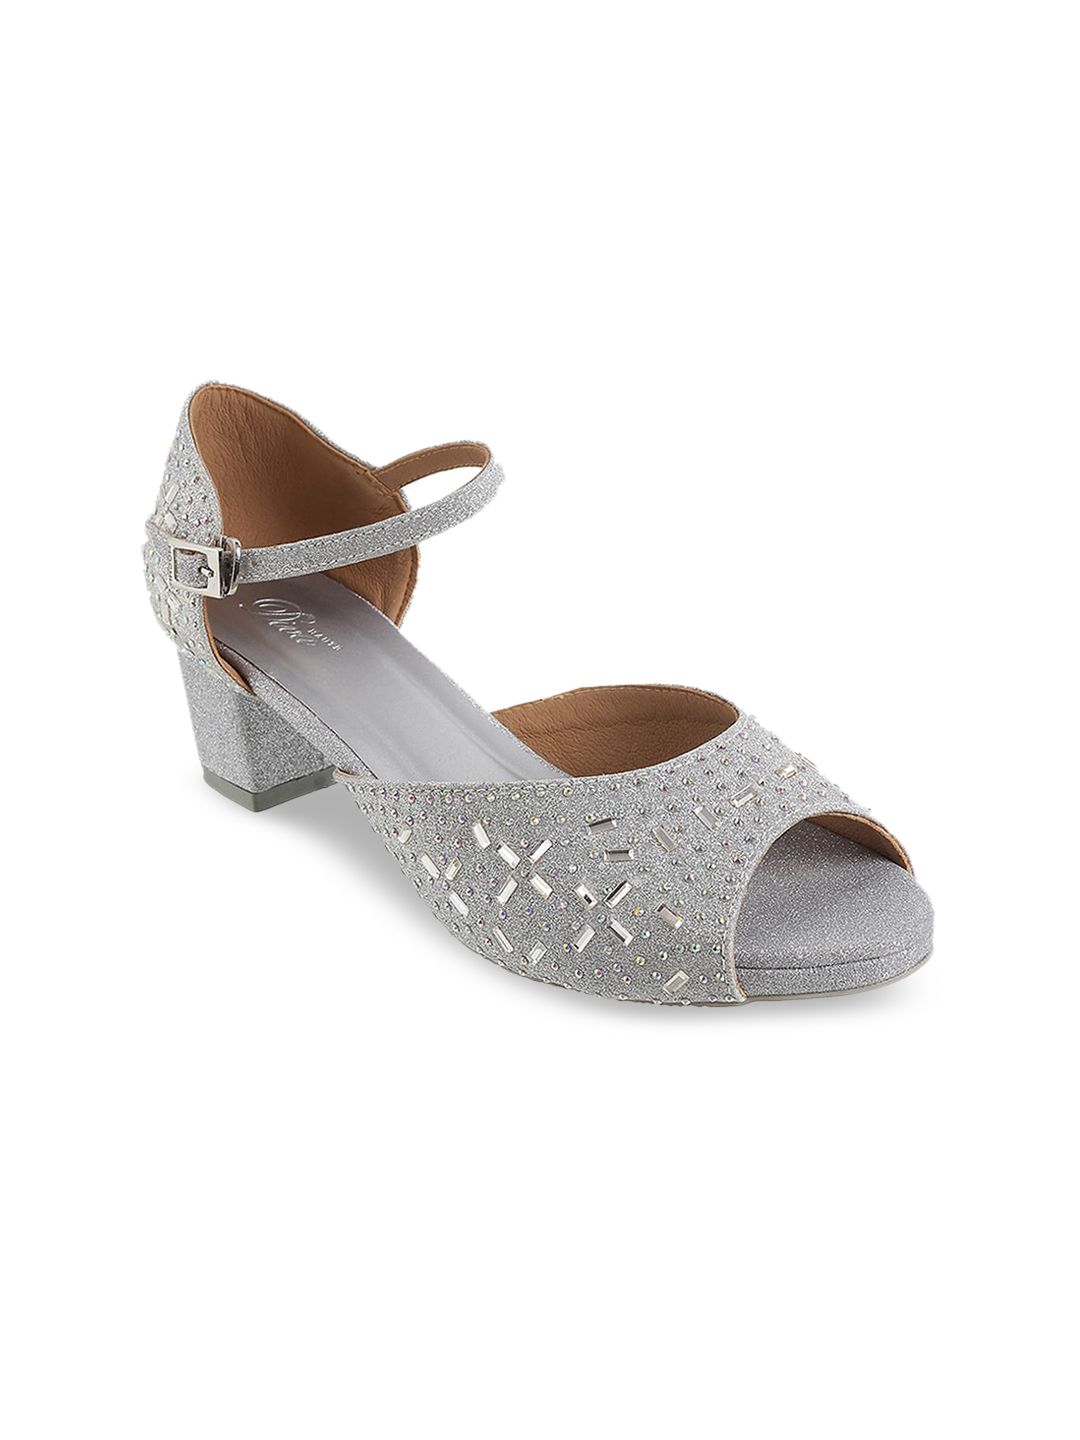 Mochi Women Grey & Silver-Toned Embellished Block Heels Price in India